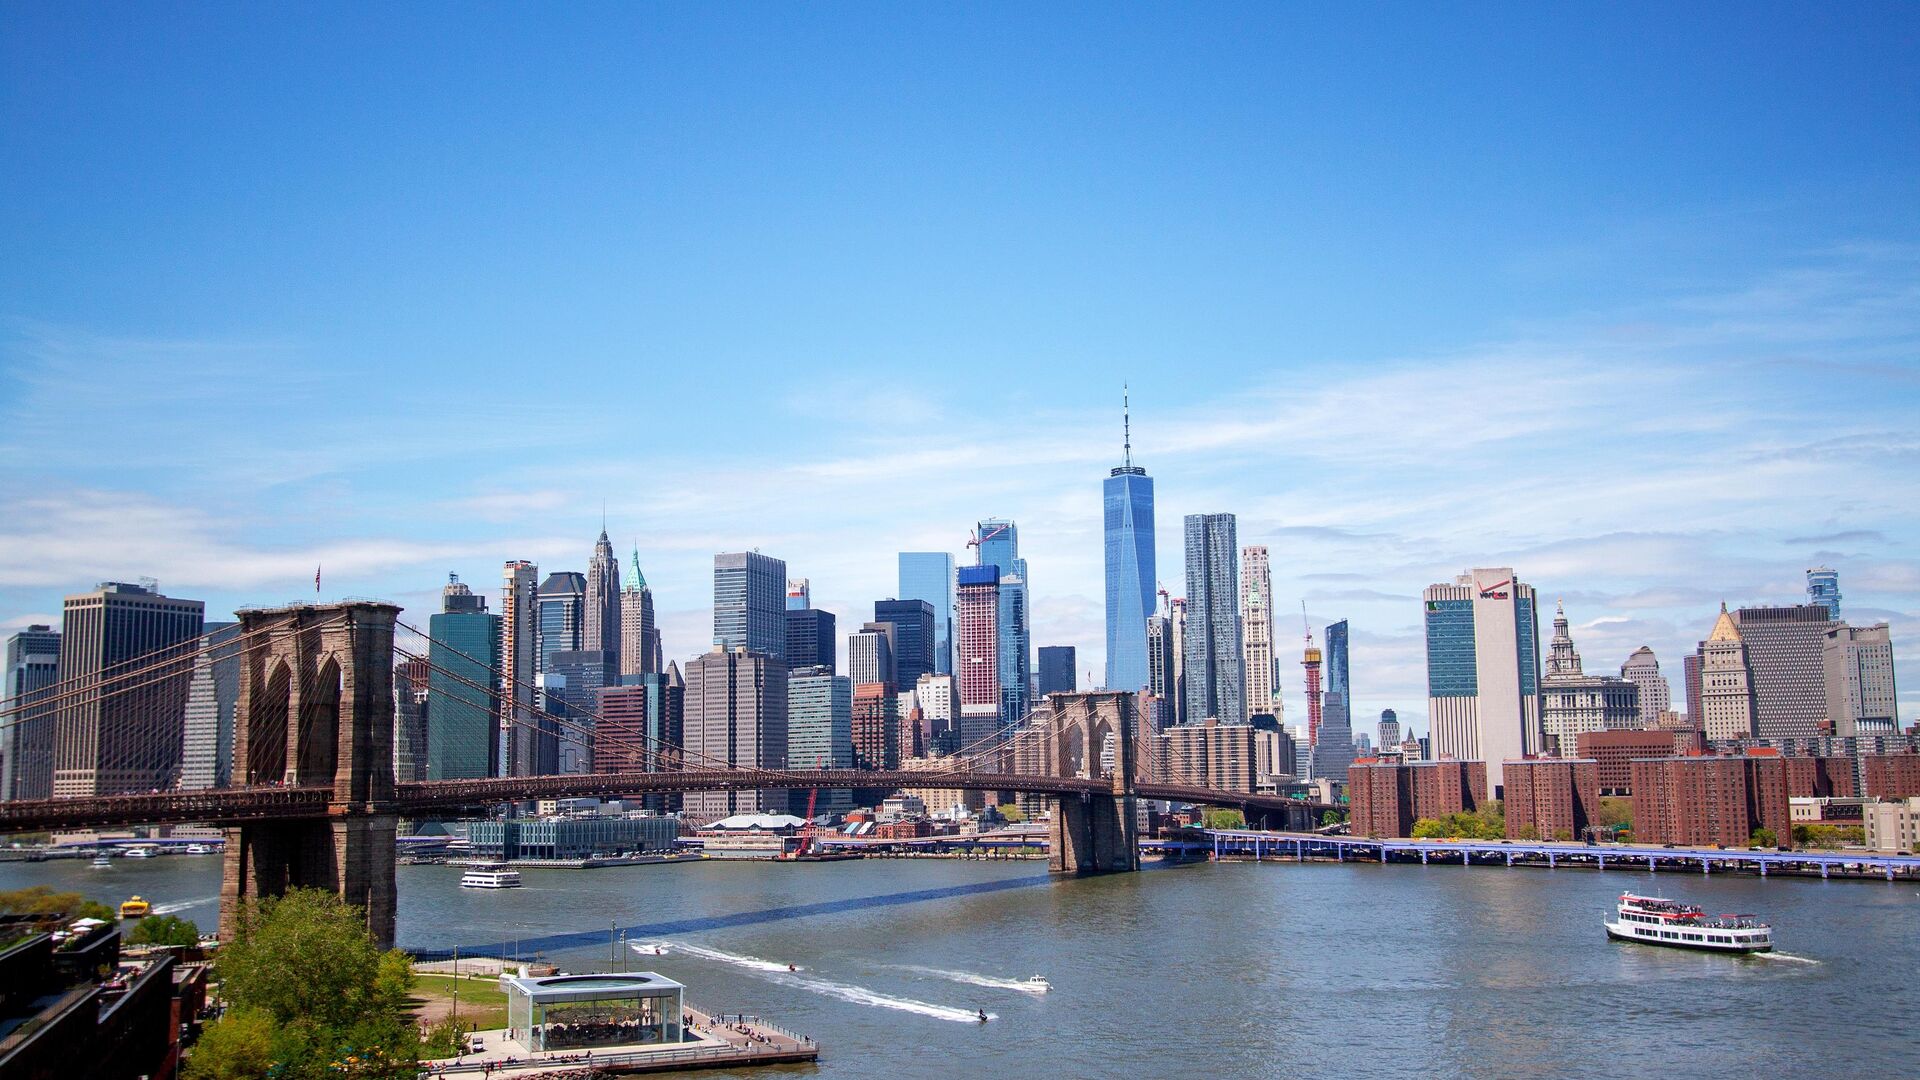 Вид на Бруклинский мост соединяющий районы Нью-Йорка Манхэттен и Бруклин - РИА Новости, 1920, 17.03.2021